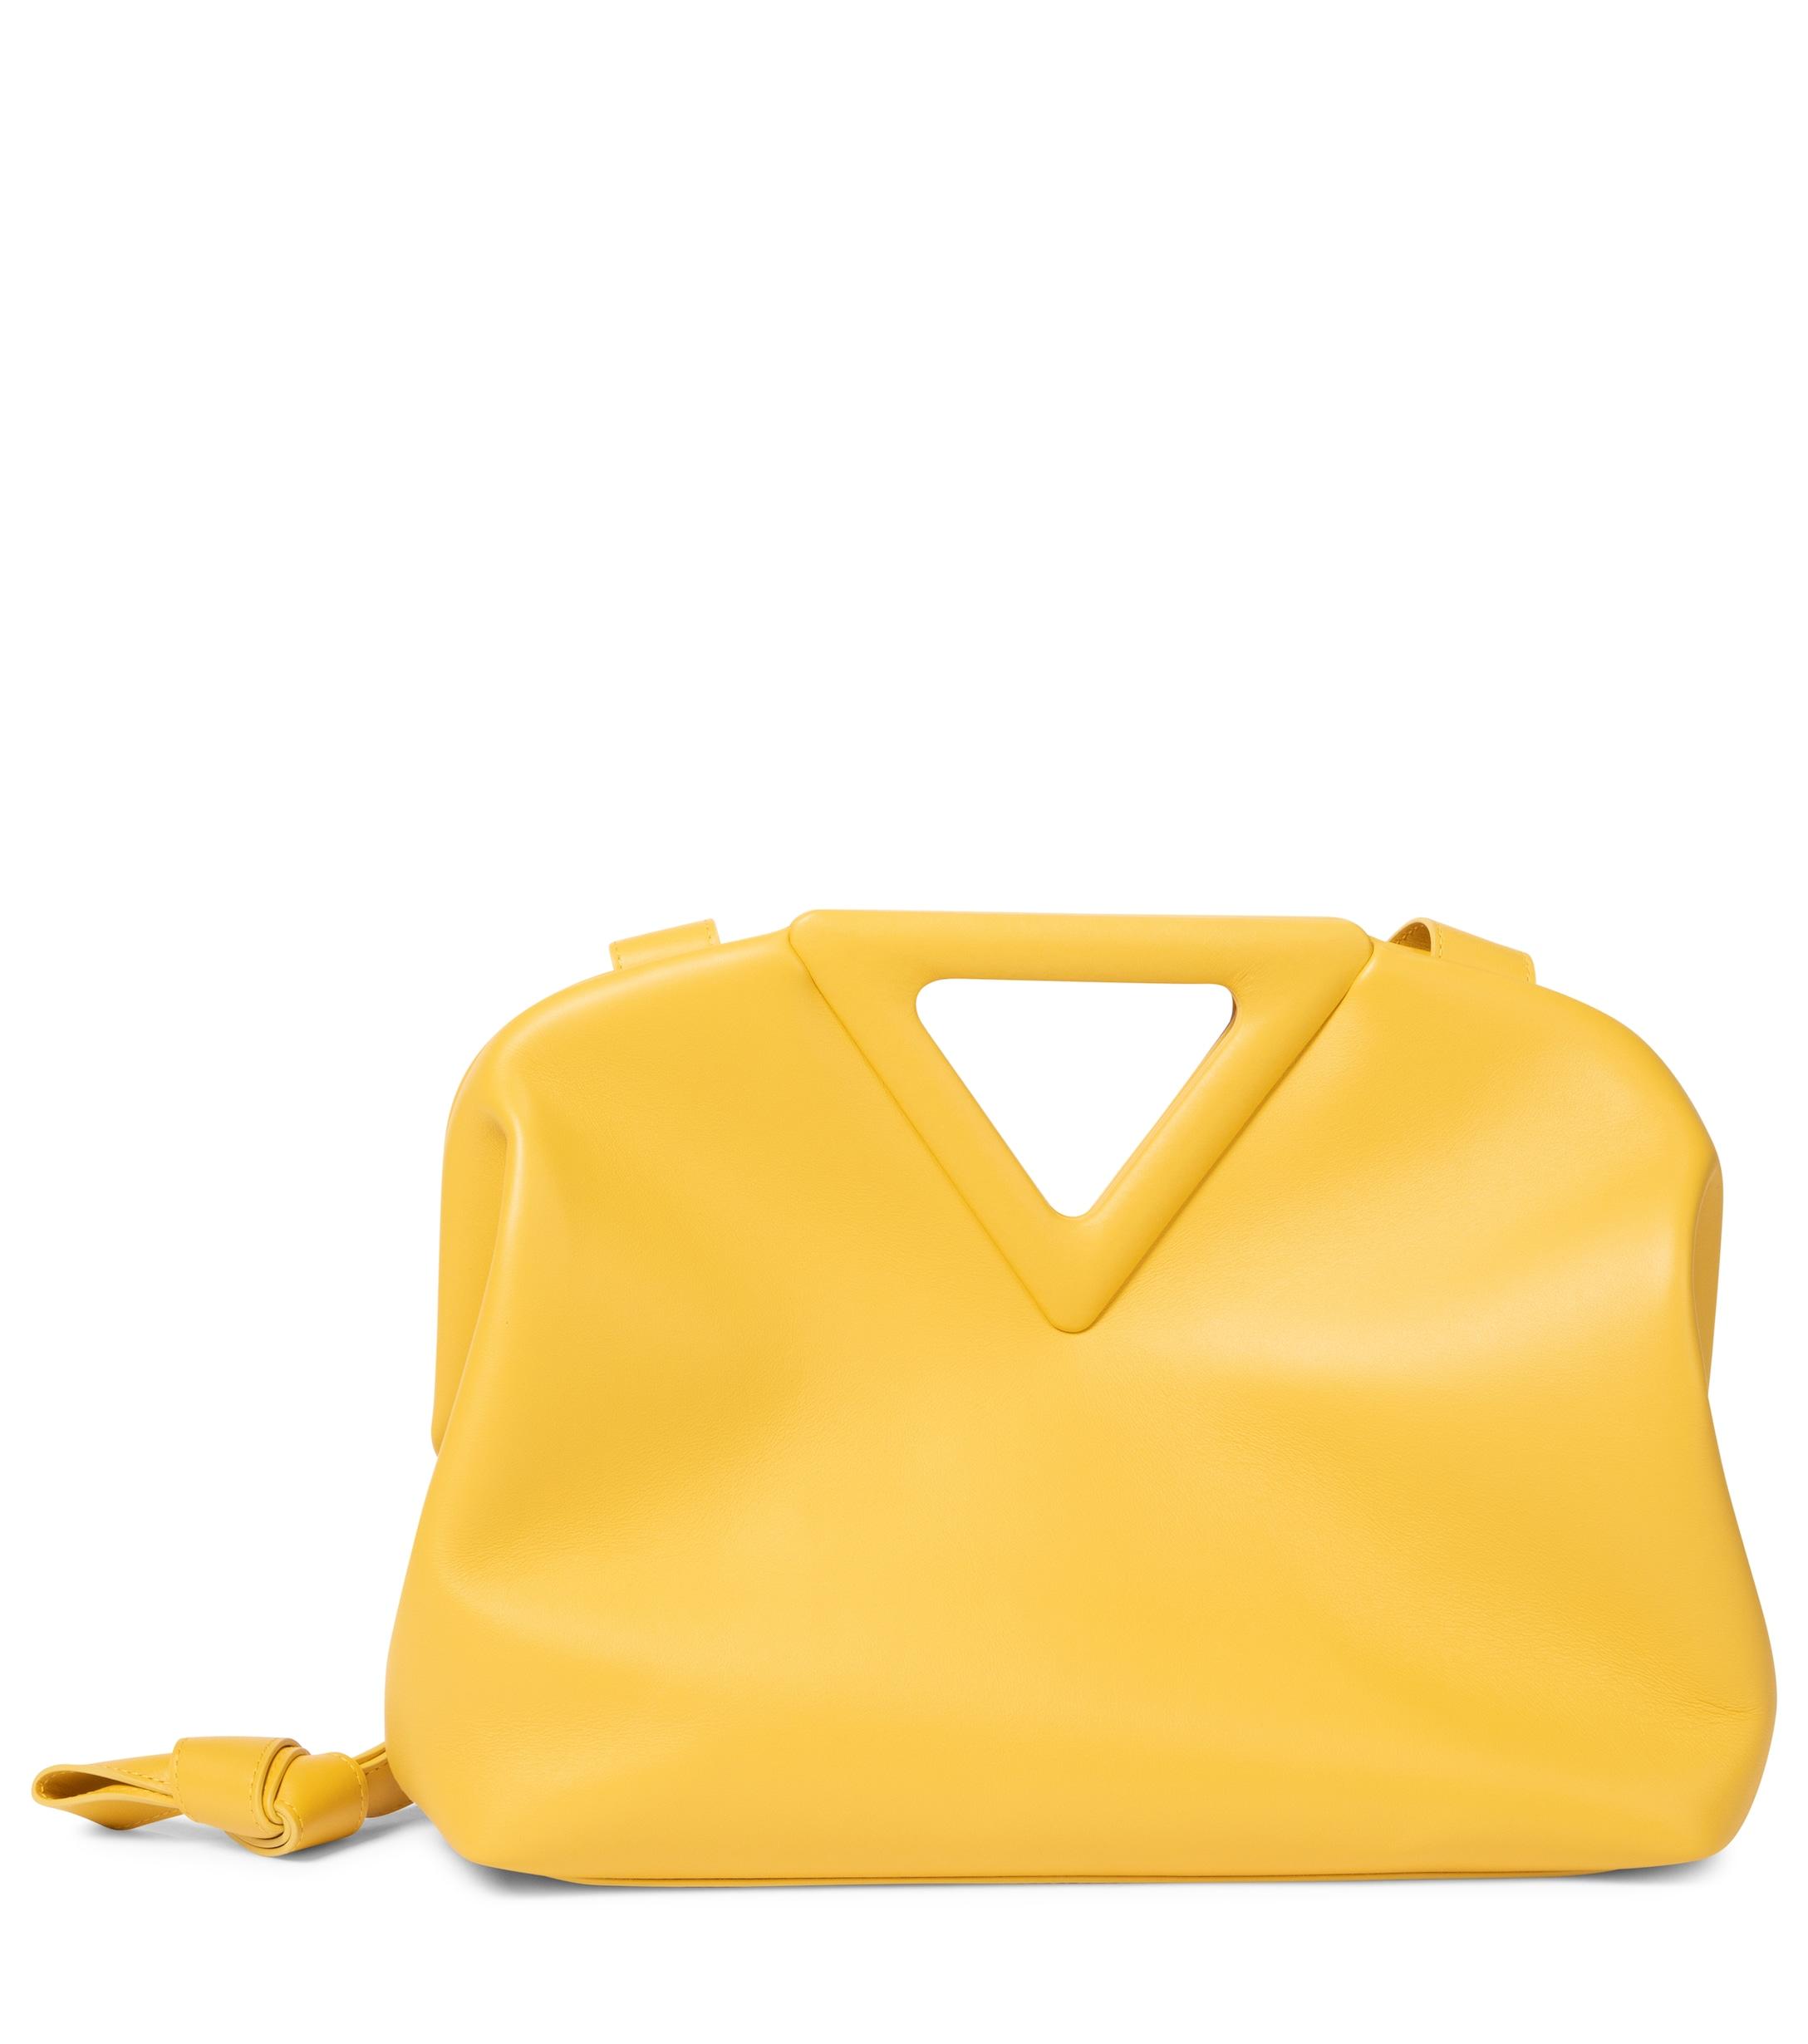 Bottega Veneta The Triangle Leather Shoulder Bag in Yellow - Lyst